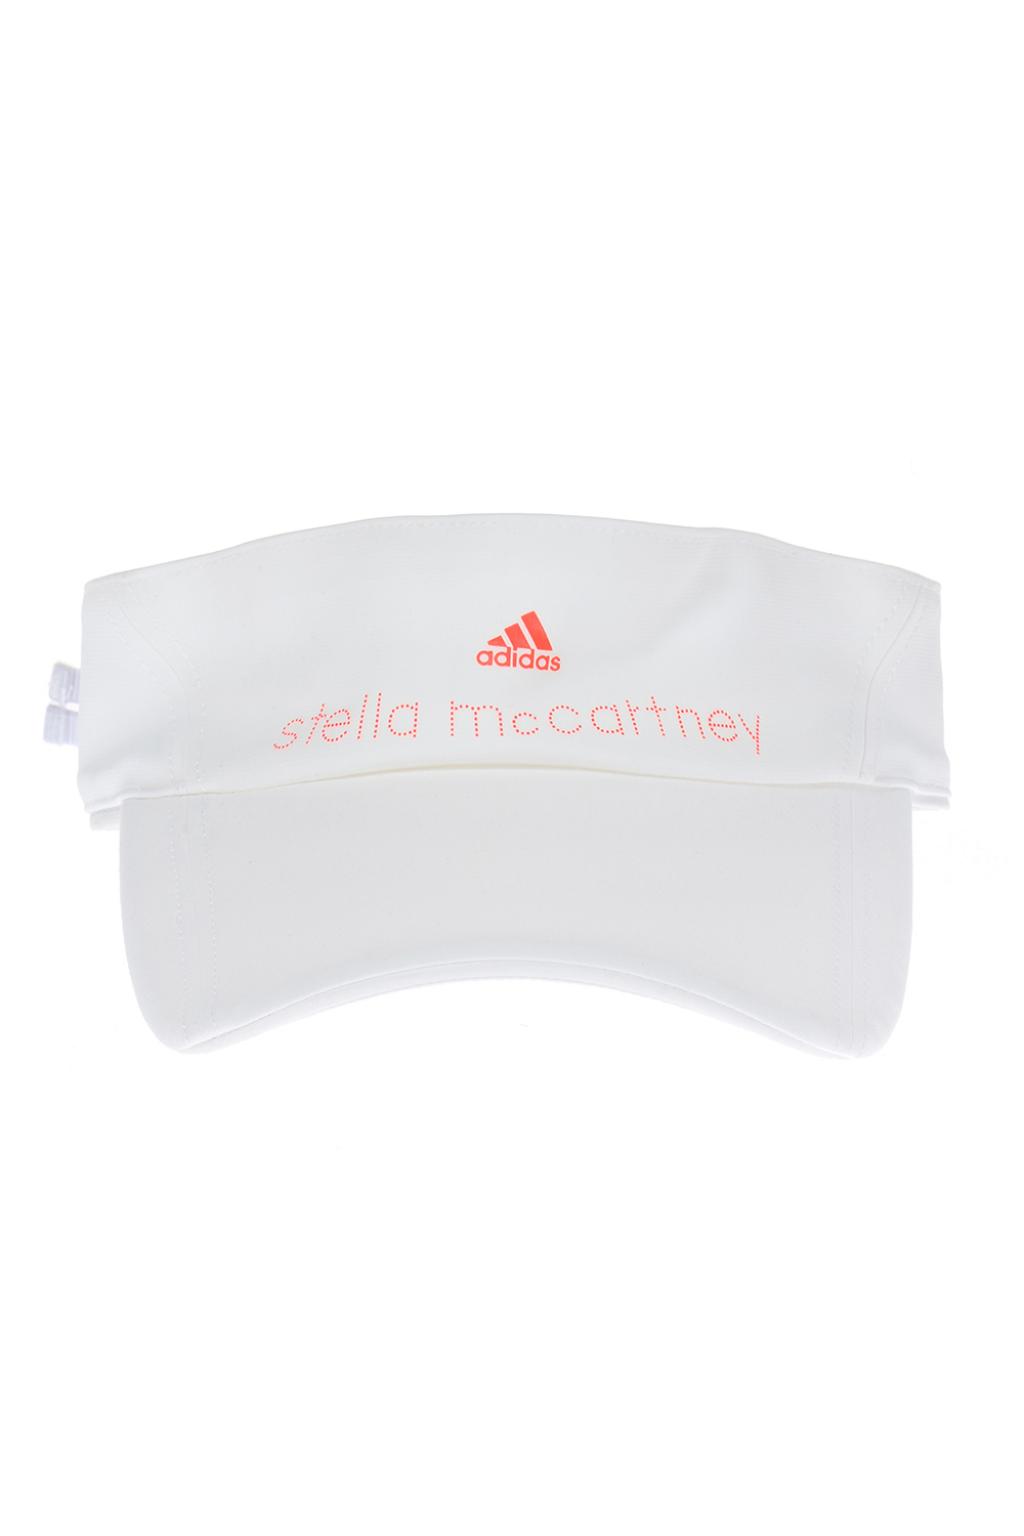 adidas stella mccartney visor